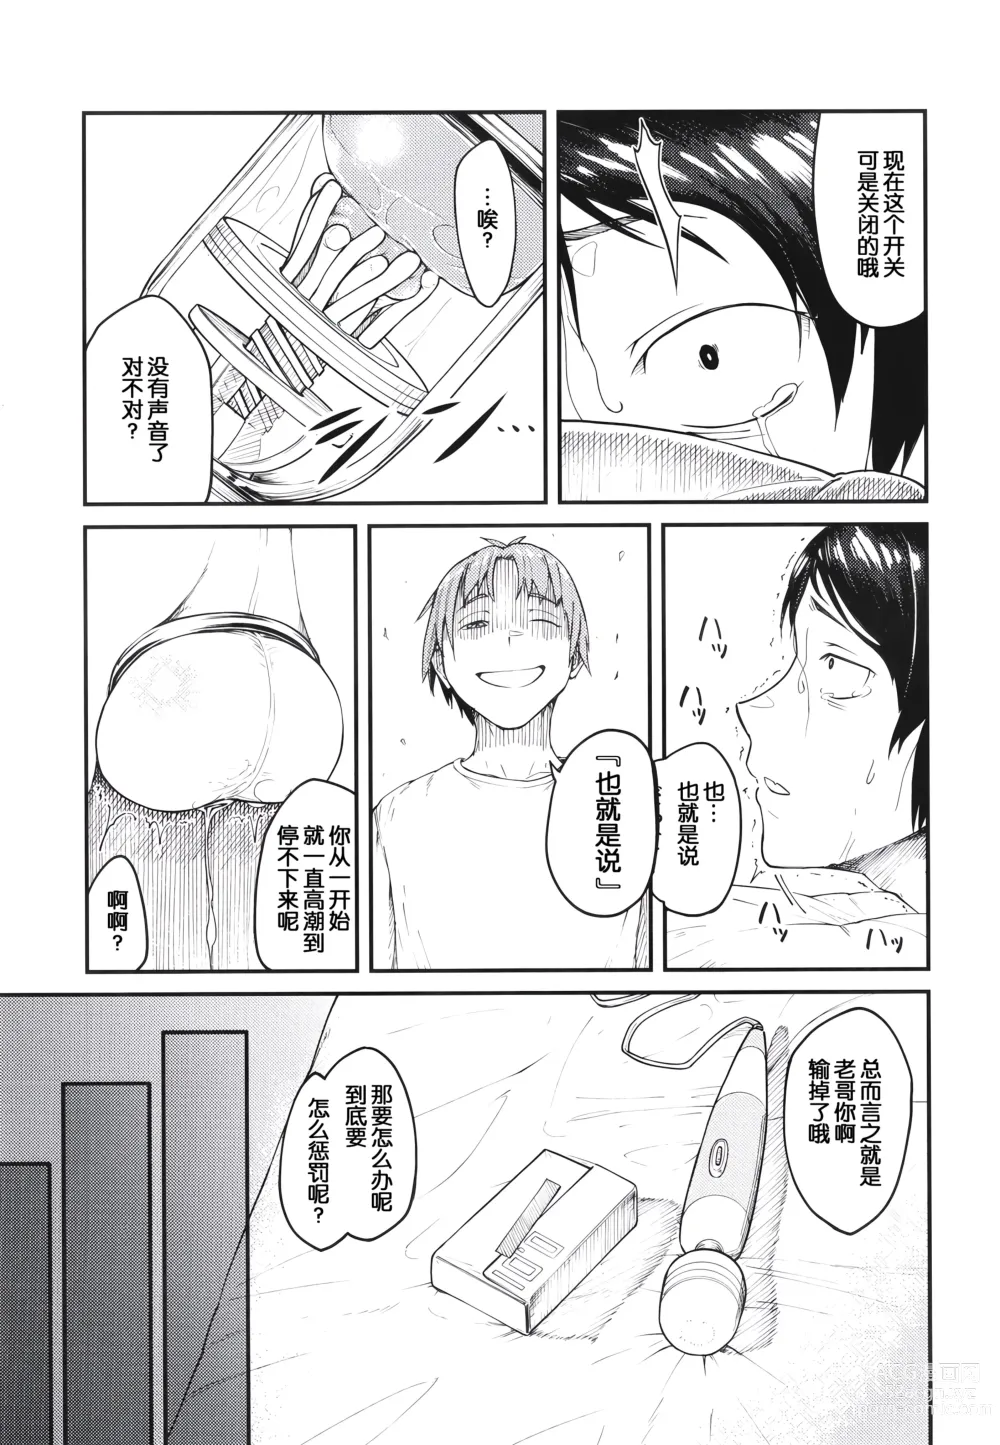 Page 14 of doujinshi MHD-01